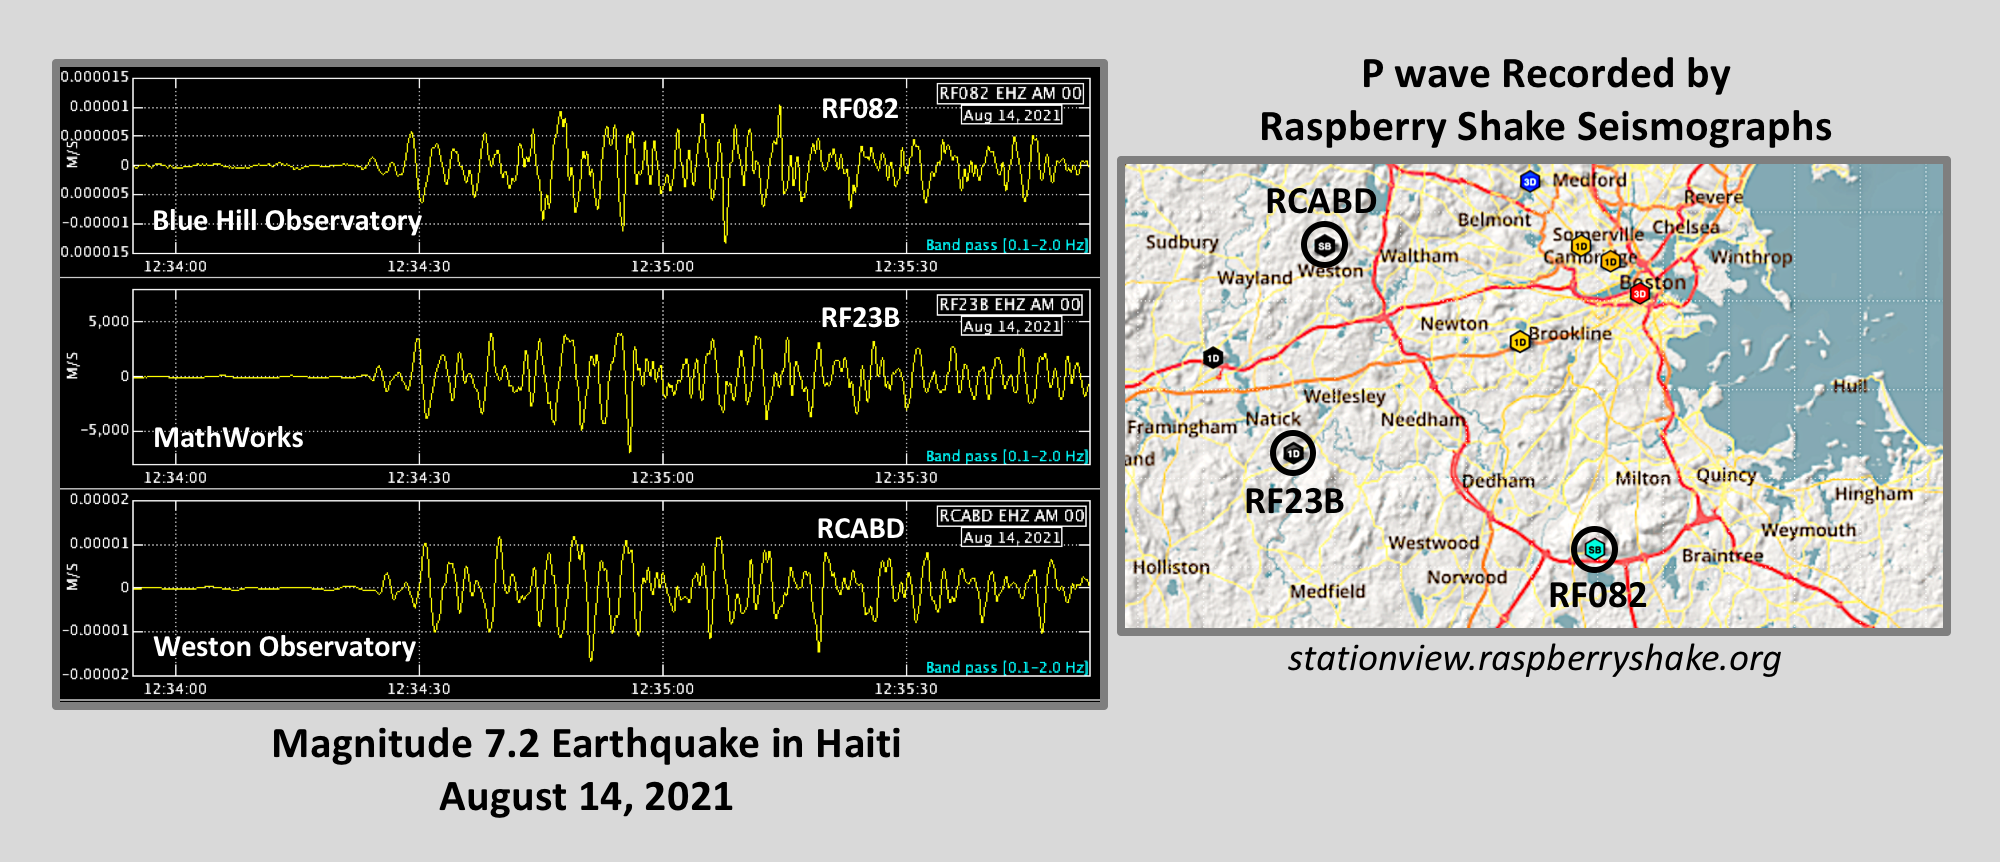 Haiti earthquake (8/14/21) at BH Observatory, MathWorks, & Weston Observatory